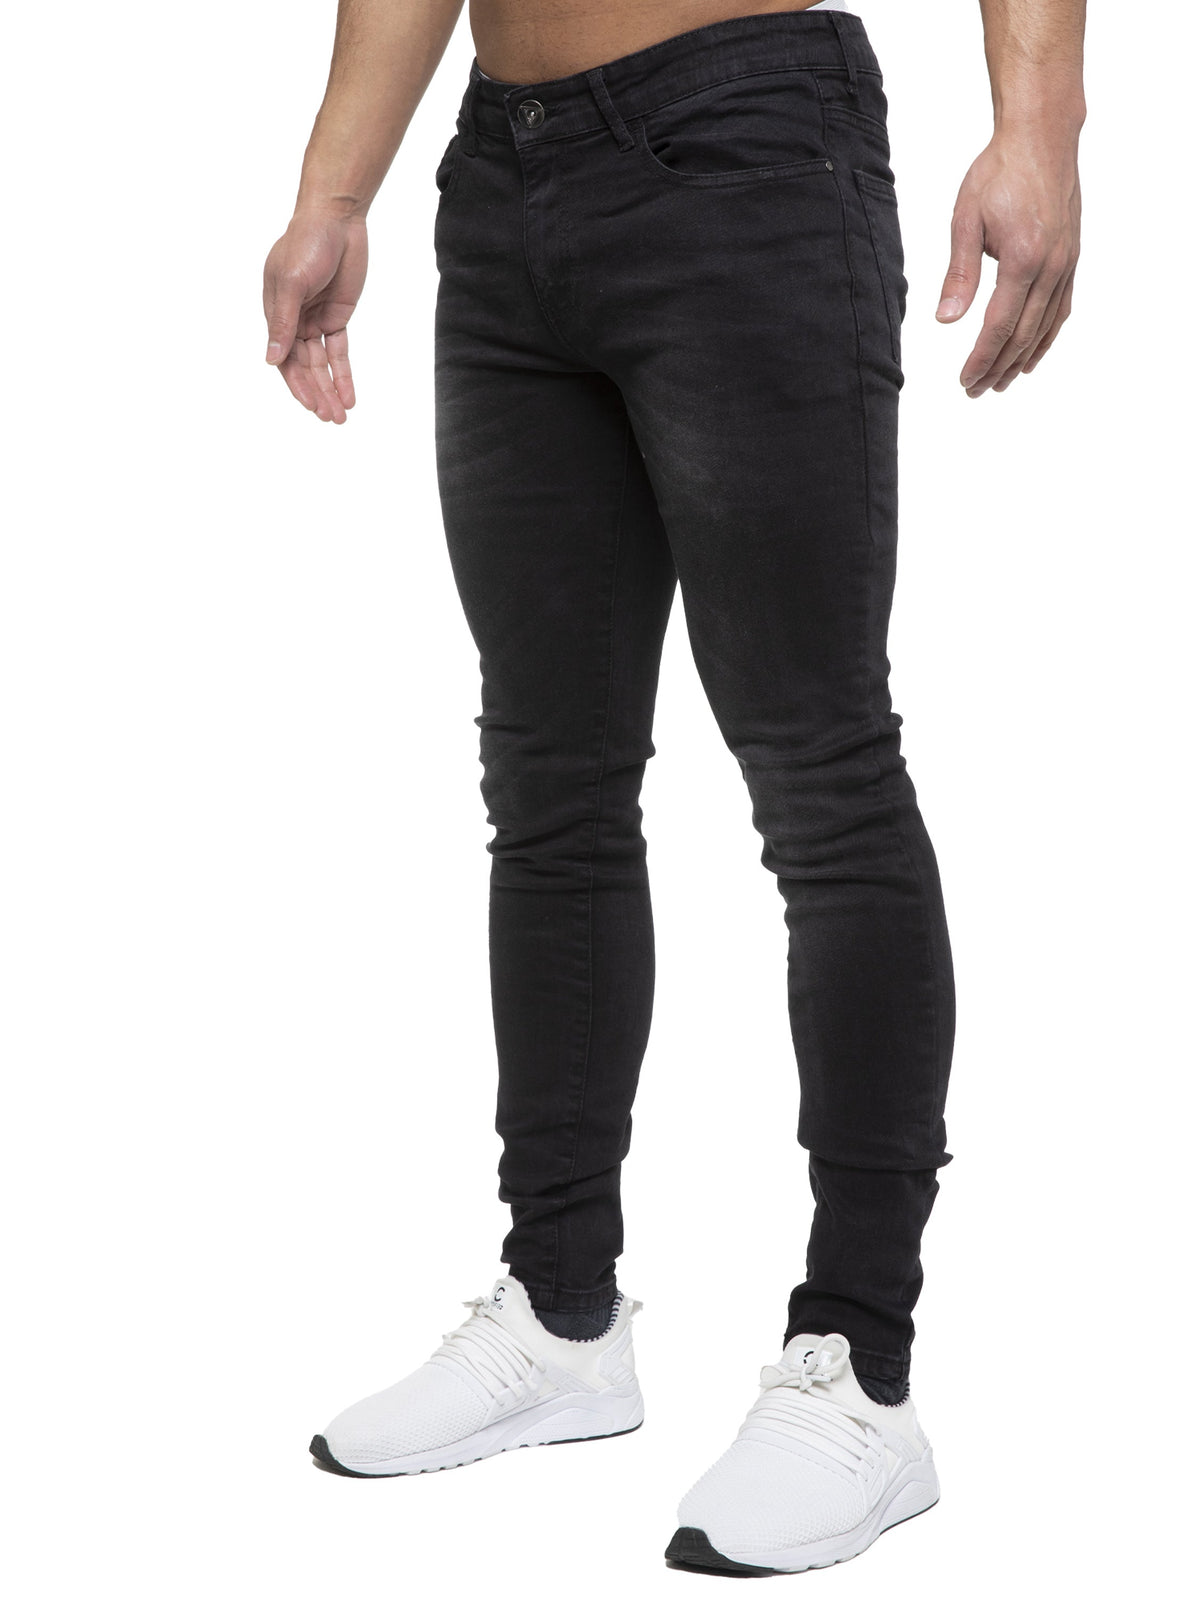 hot sale men jeans casual denim| Alibaba.com